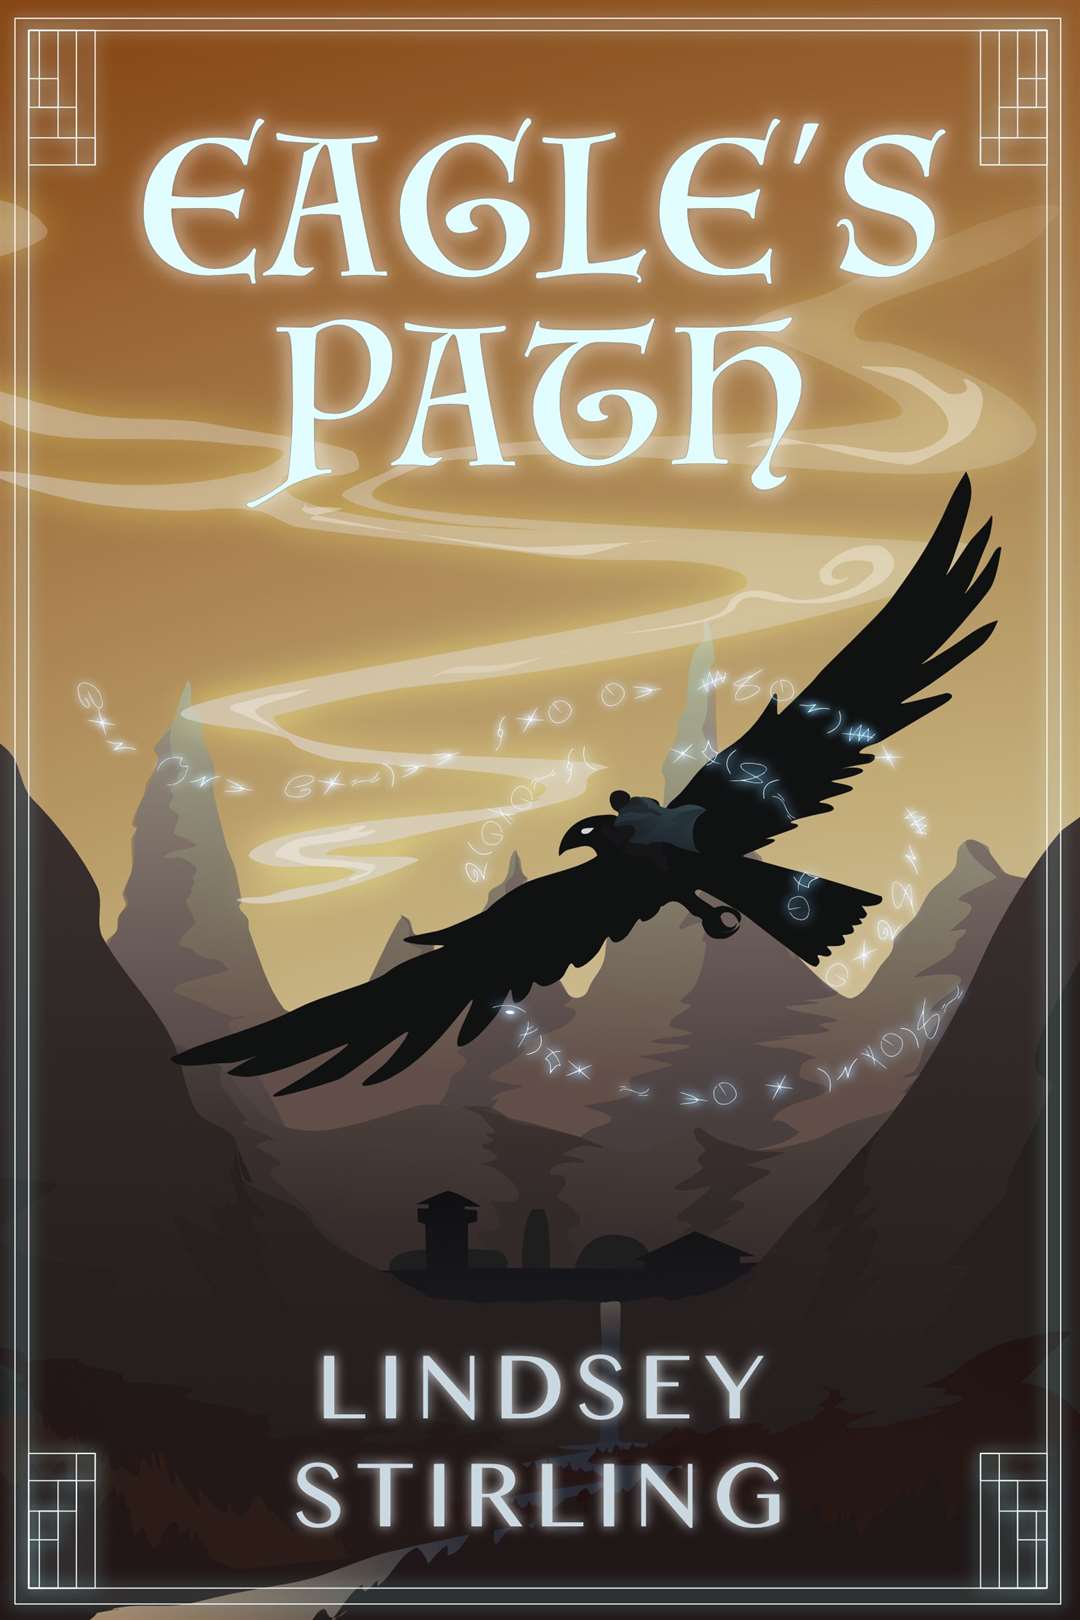 Eagle's Path is part of a fantasy saga.